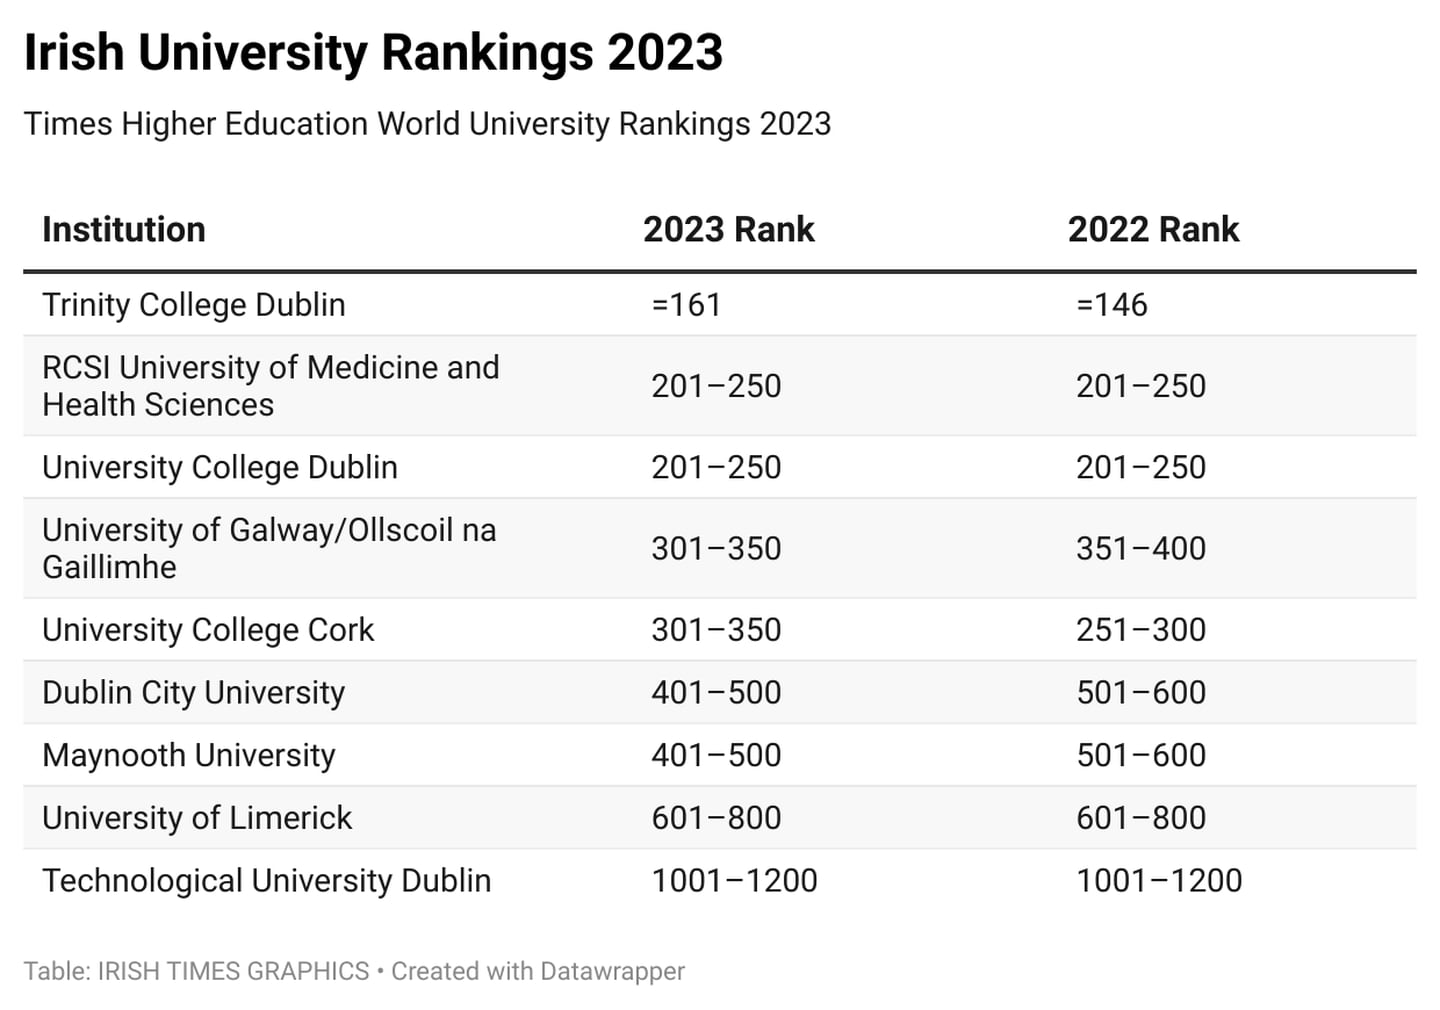 A breakdown of Irish universities in the Times Higher Education World University Rankings 2023.